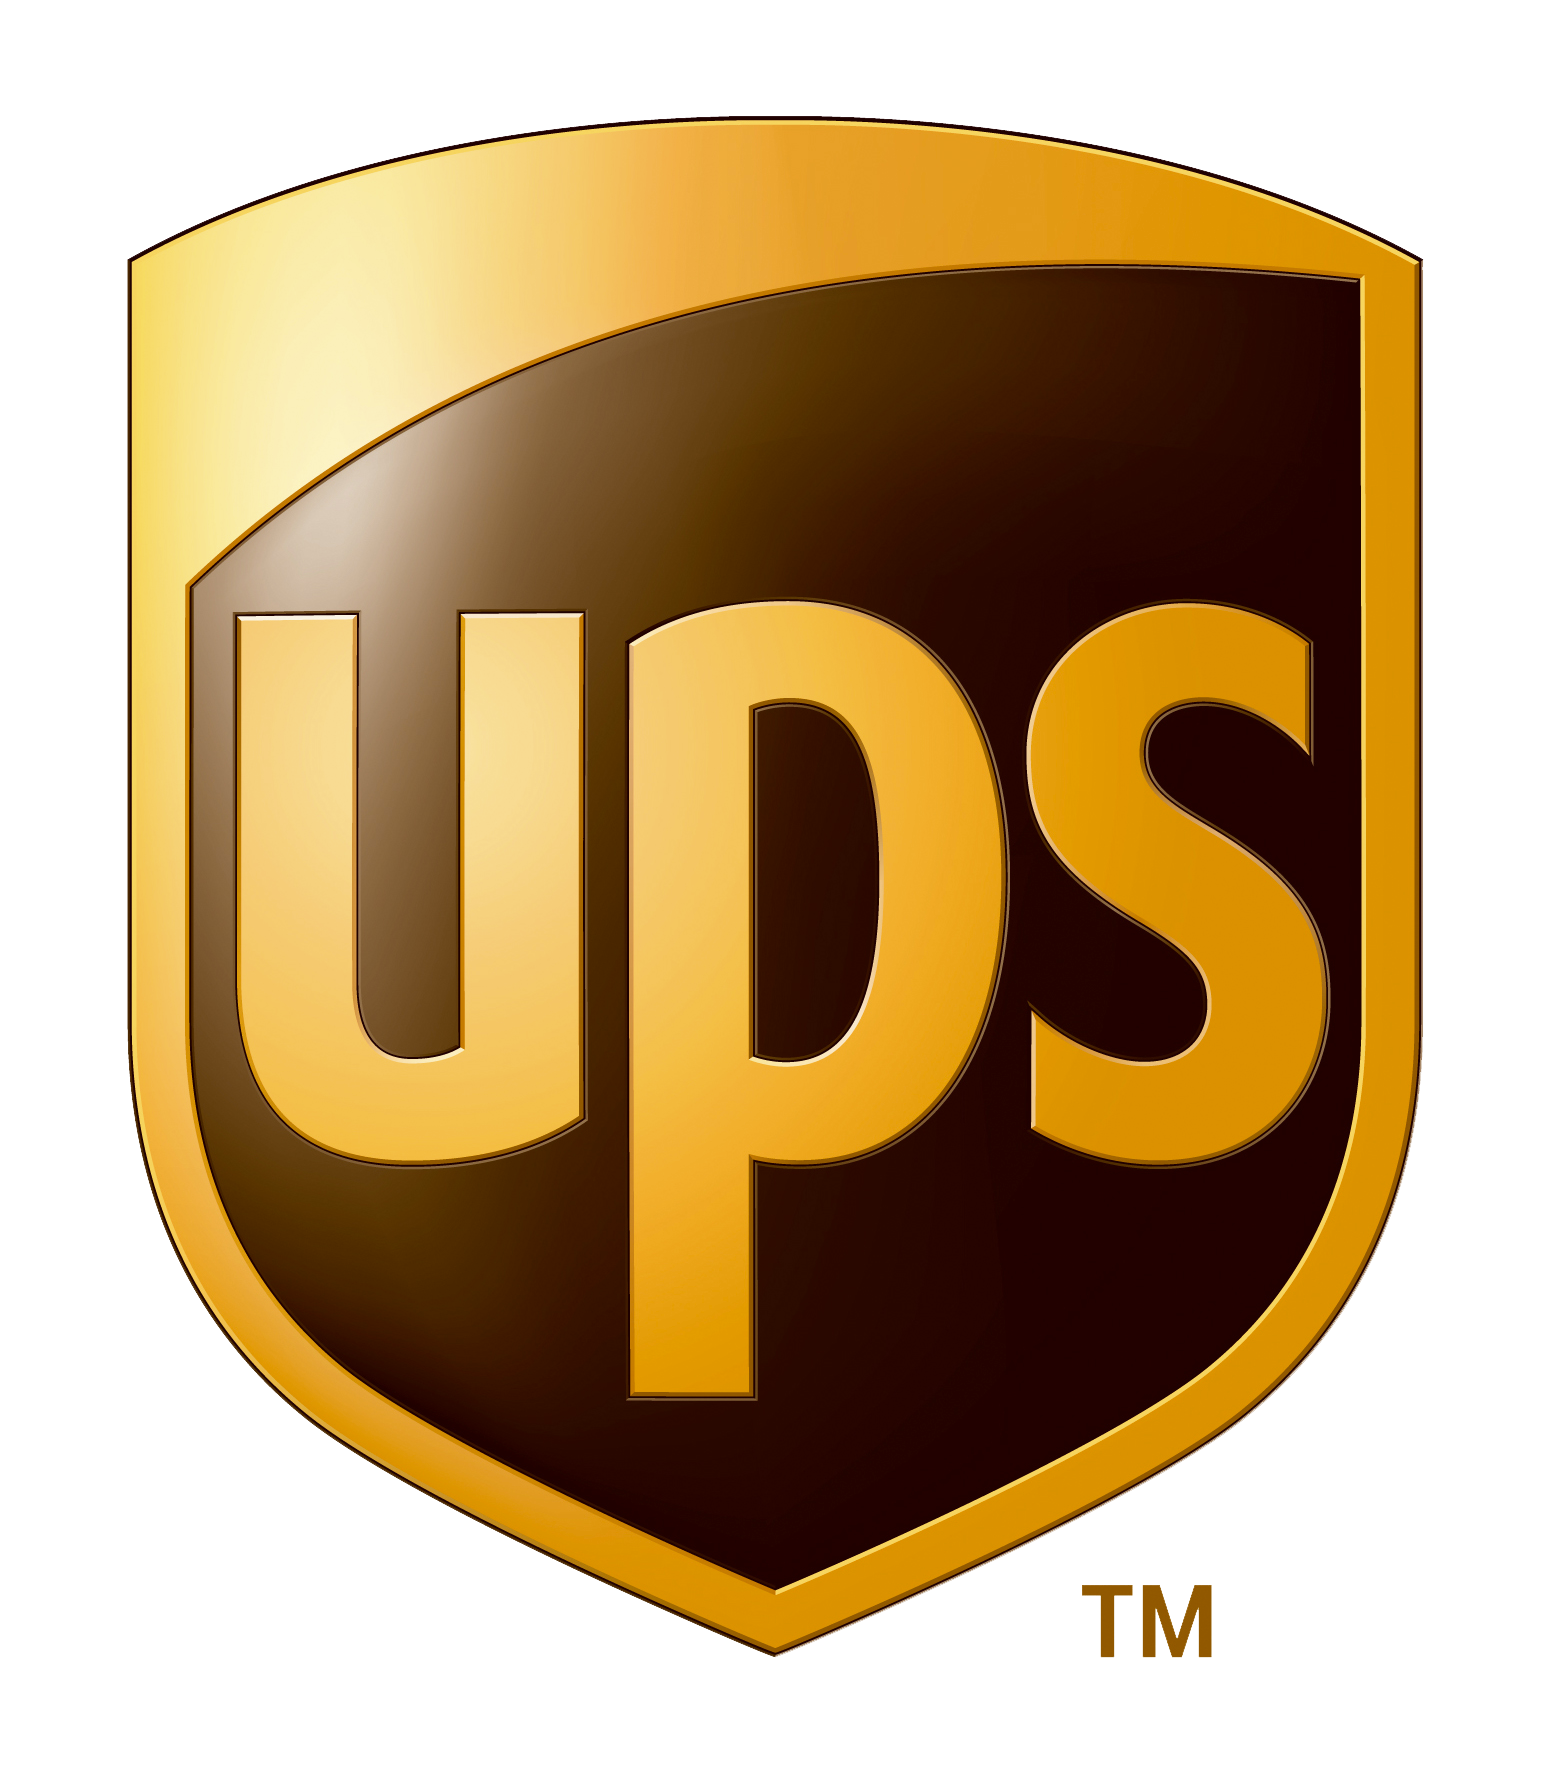 ups-logo.gif